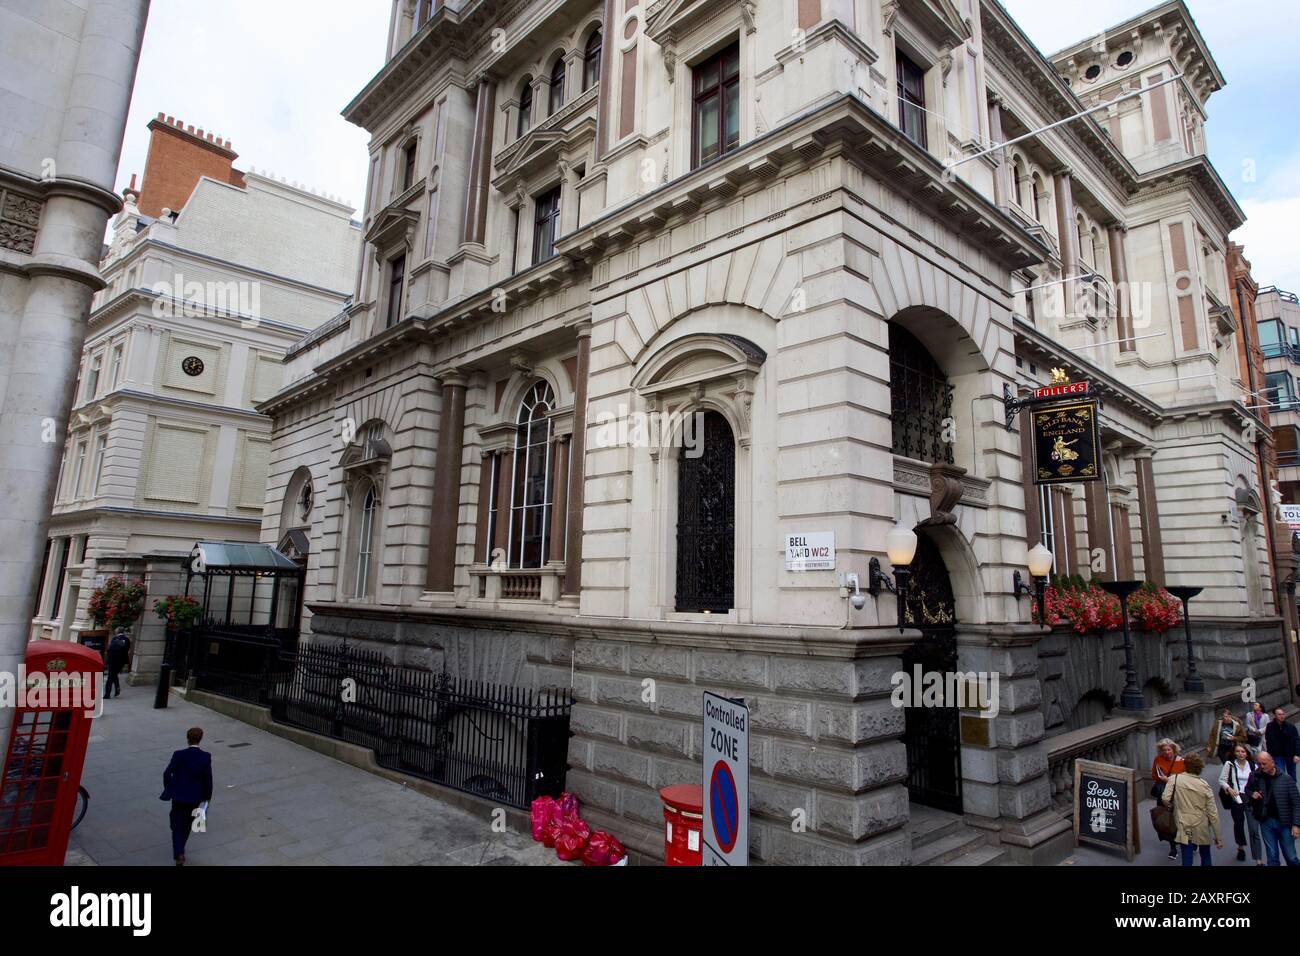 The Old Bank of England pub, Fleet street, City of London, London, England. Stock Photo